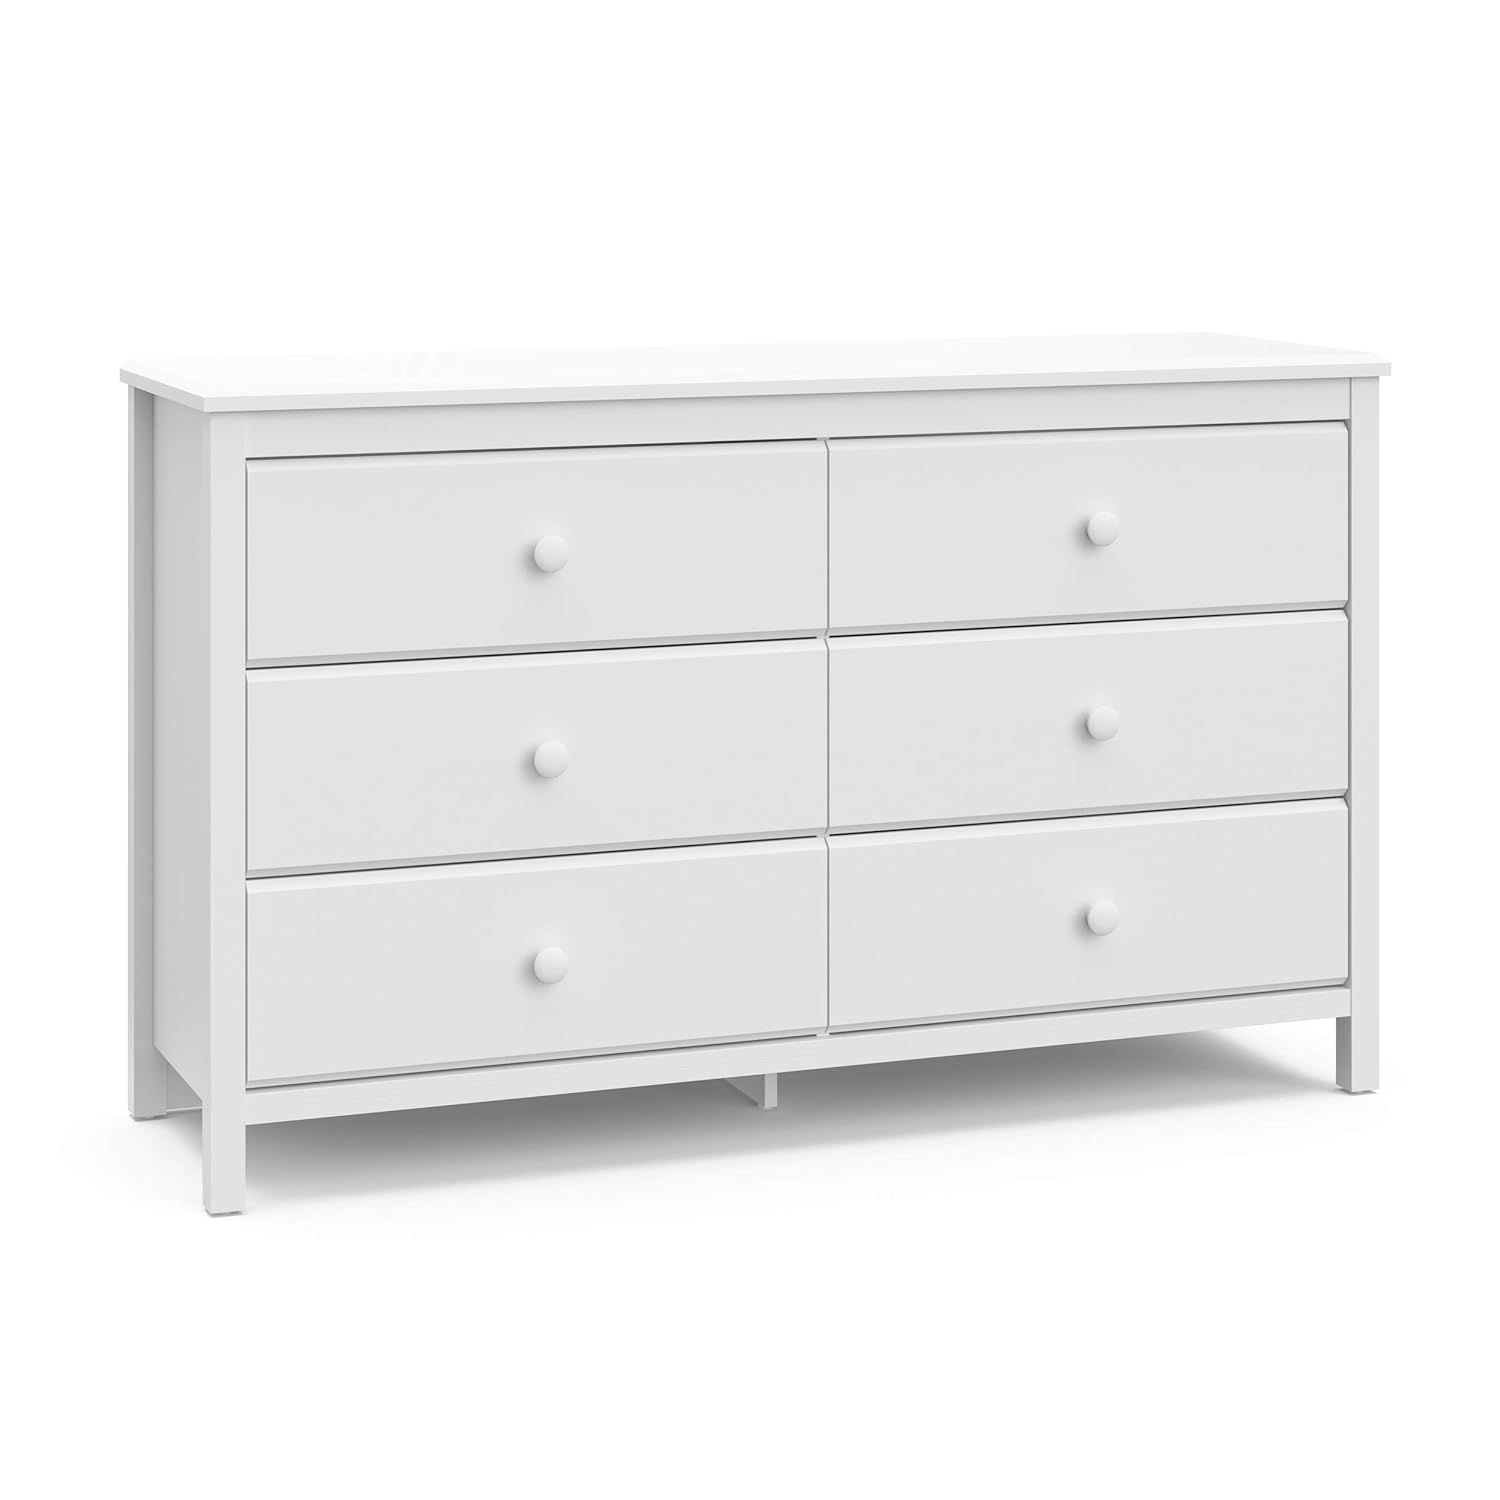 Storkcaft Alpine 6 Drawer Dresser (White) – Stylish Storage Dresser Chest for Bedroom, 6 Spacio... | Amazon (US)